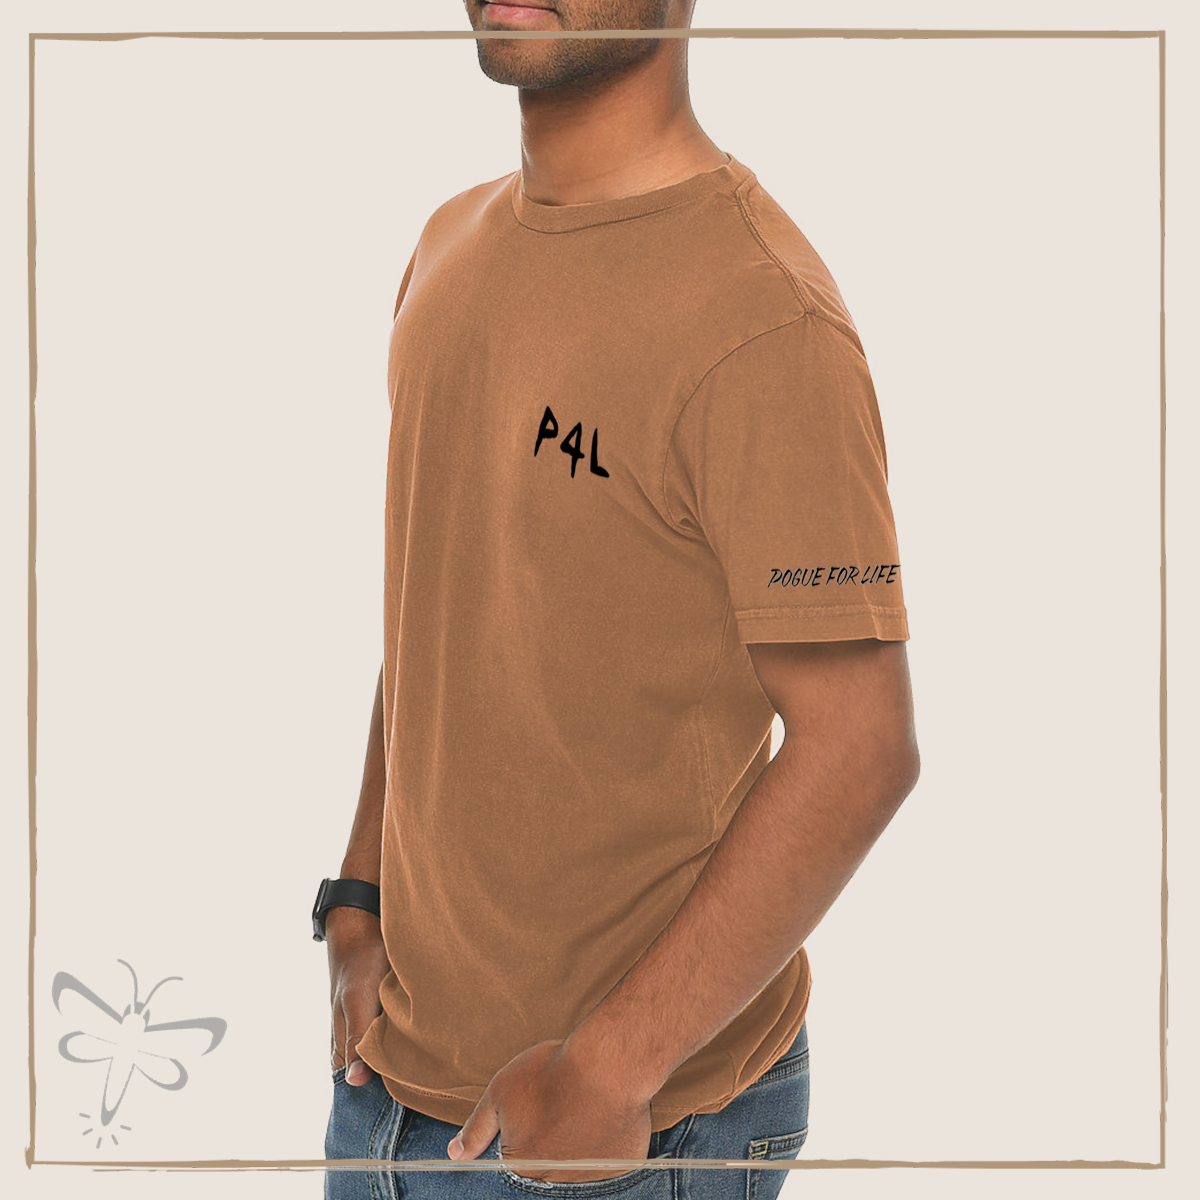 P4L T-Shirt